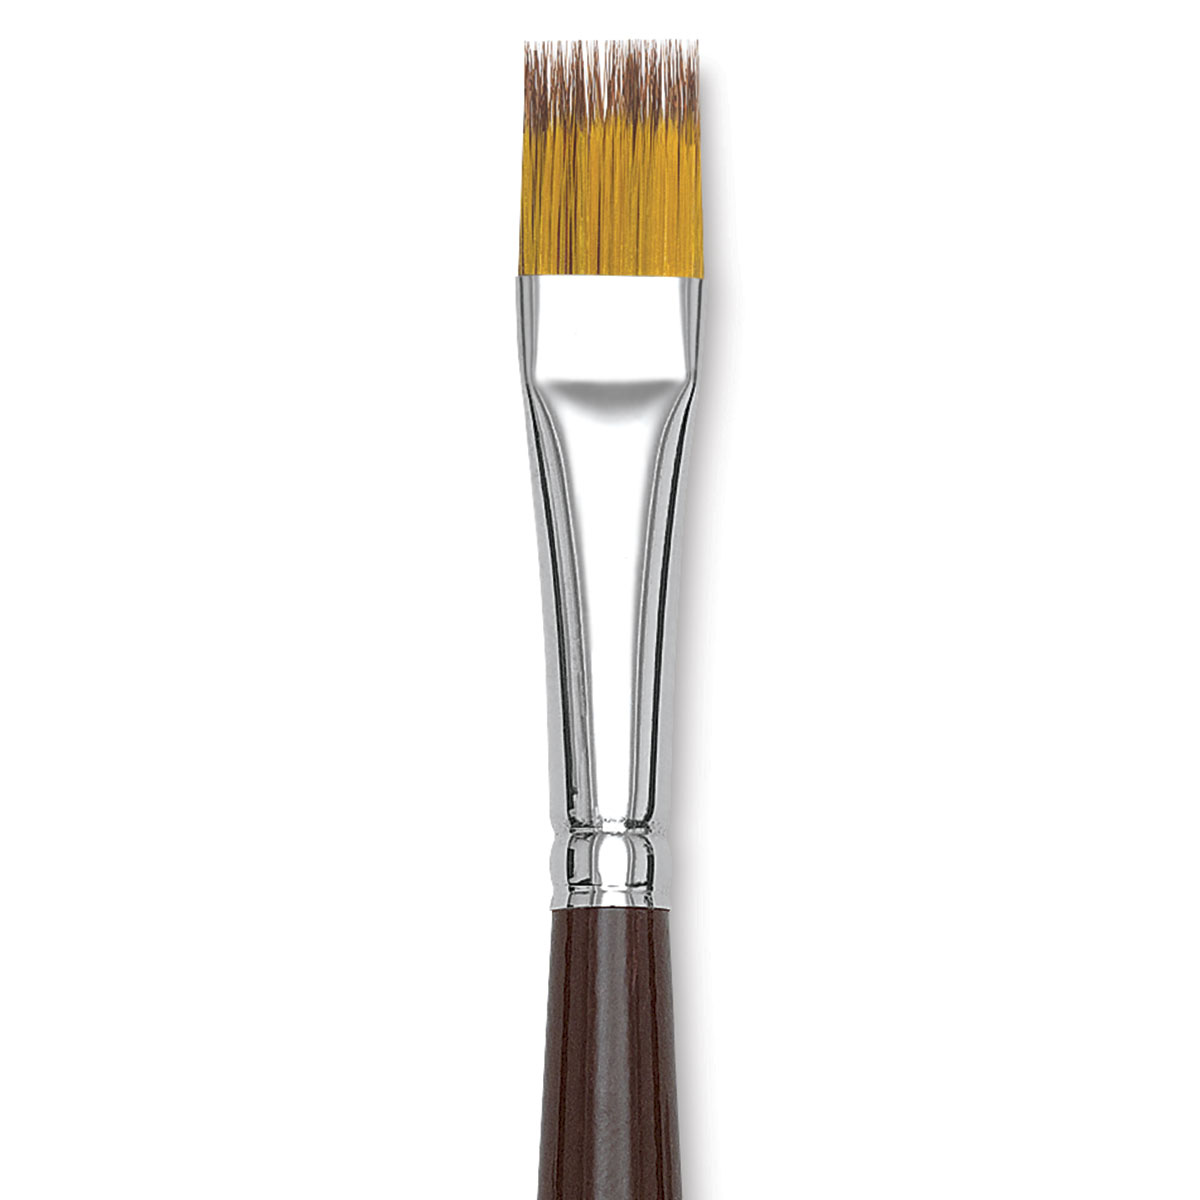 Da Vinci COSMOTOP-SPIN Synthetic Varnish Brush Series 5080 2 Set